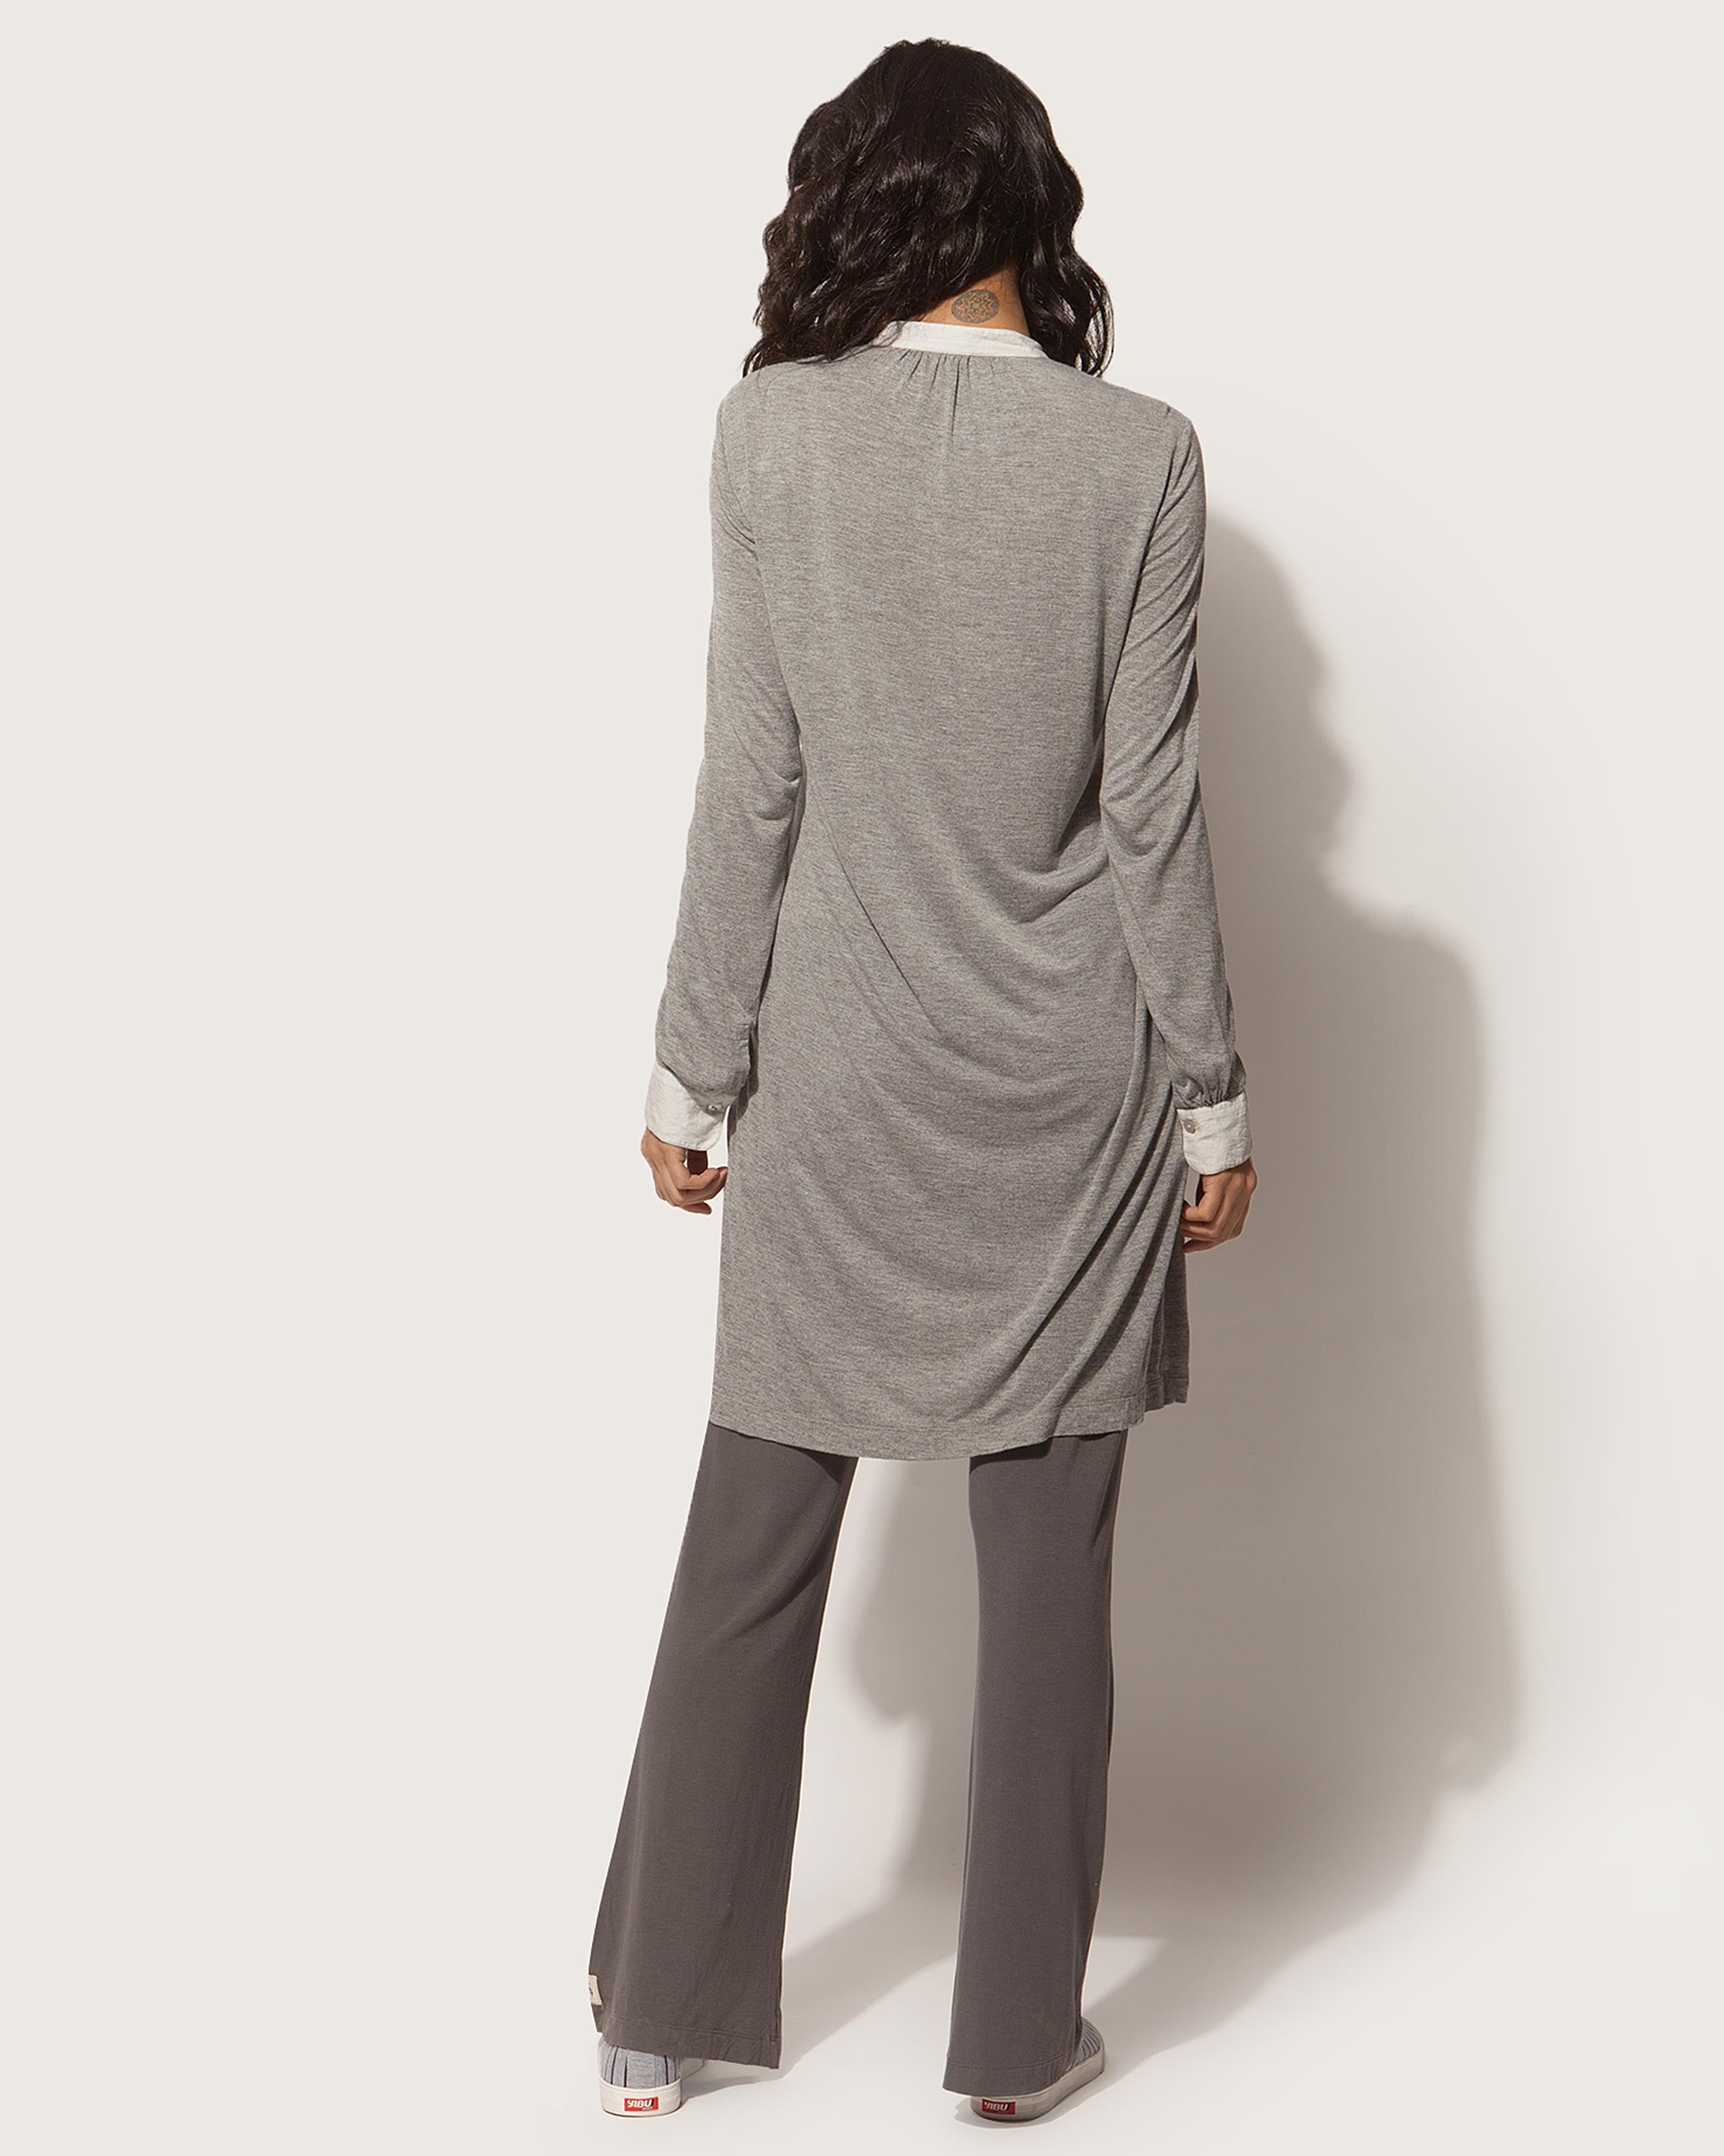 Shibui Tunic - Soft Grey